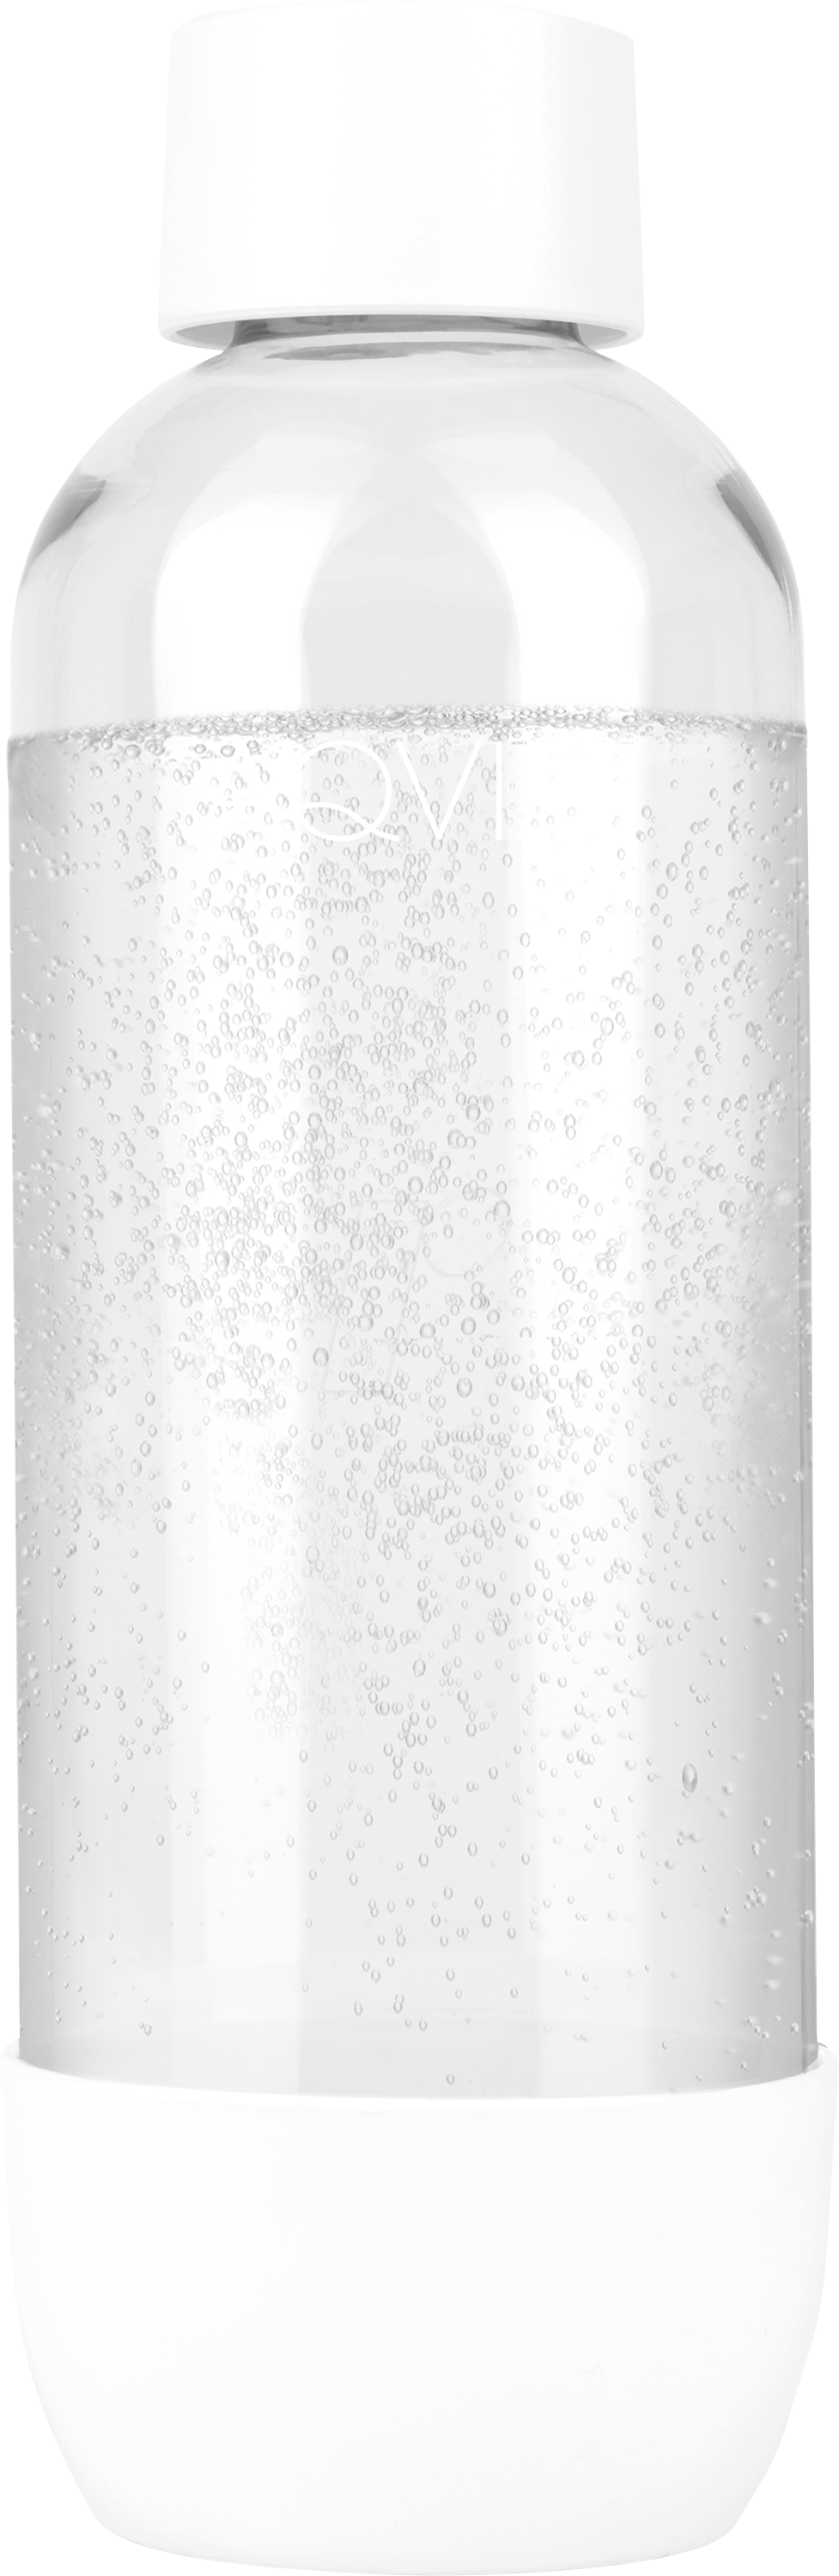 AQVIA 340556 - Aqvia Wasserflasche (PET), 1l, weiß von AQVIA